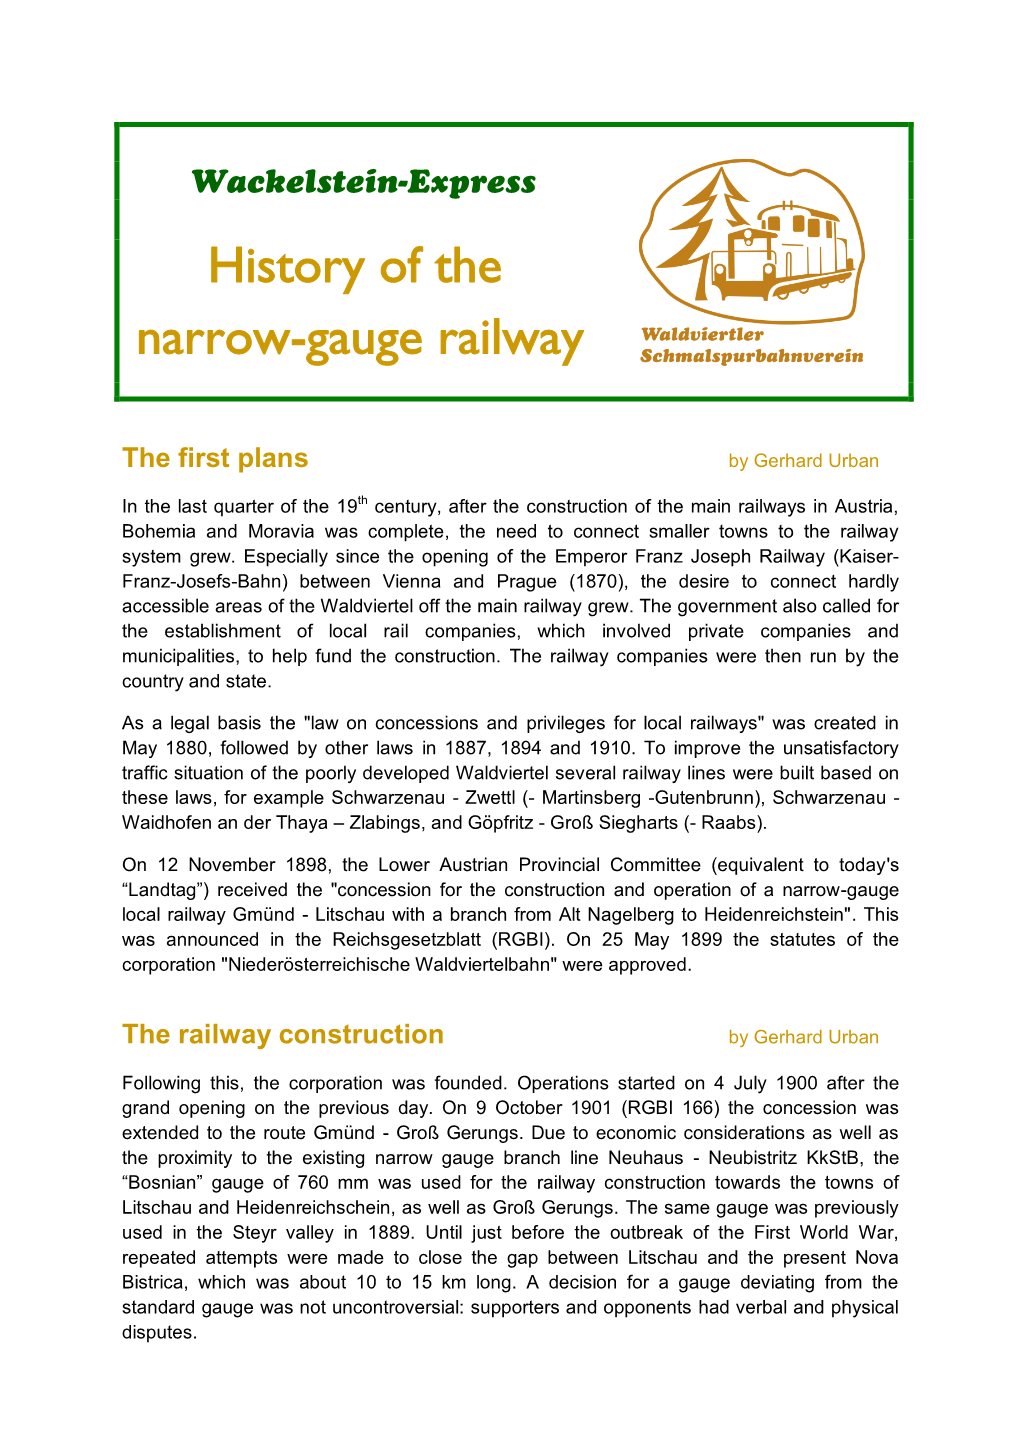 History of the Narrow-Gauge Railway